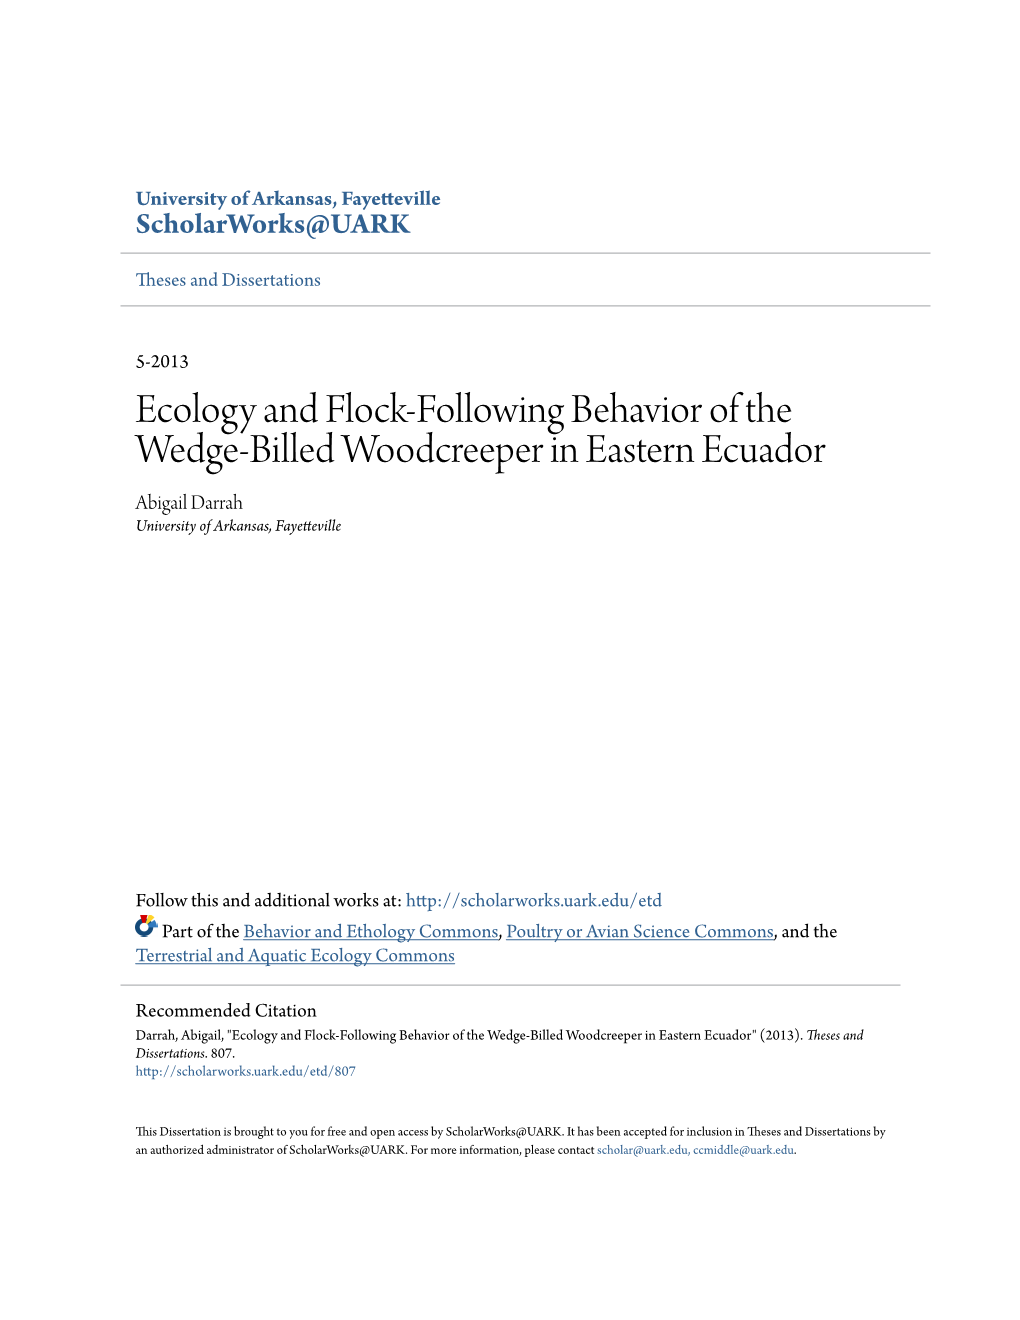 Ecology and Flock-Following Behavior of the Wedge-Billed Woodcreeper in Eastern Ecuador Abigail Darrah University of Arkansas, Fayetteville